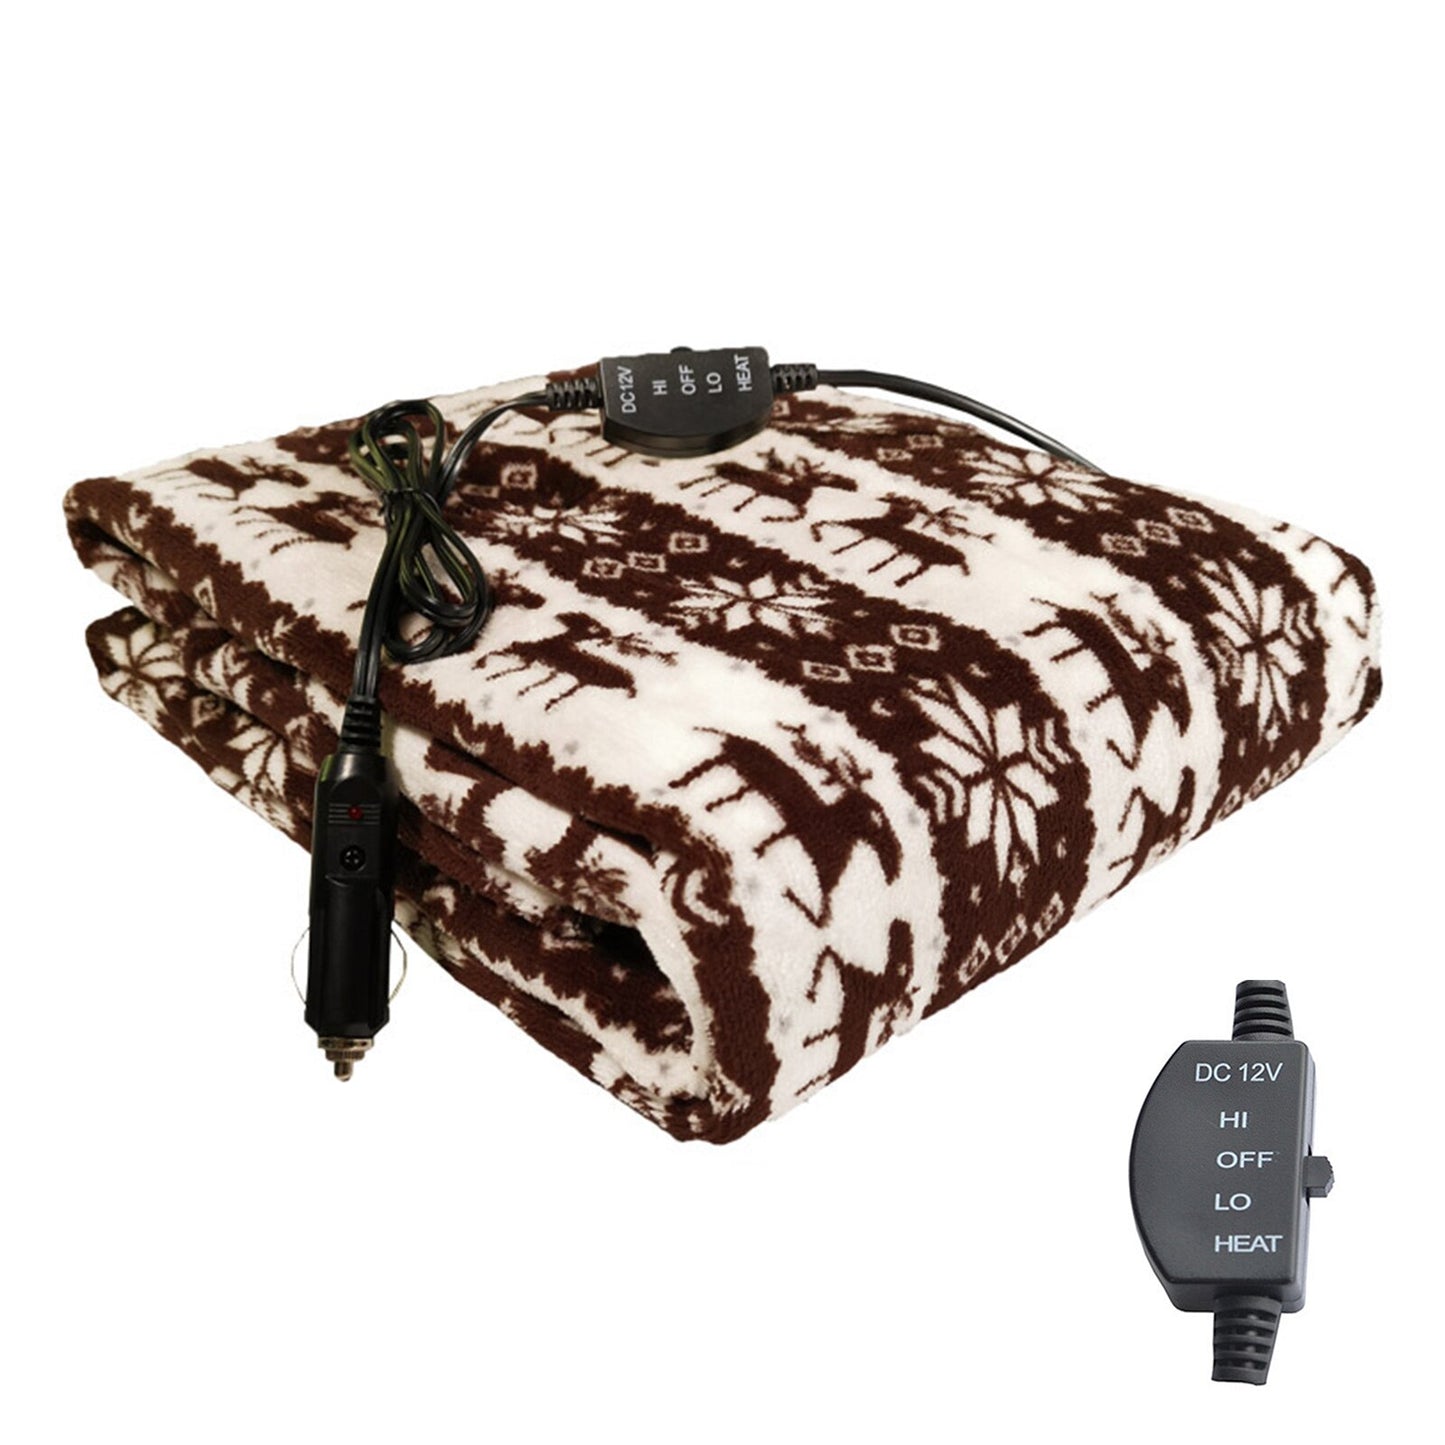 Travel Throw Fleece Electric Throw 2 Heat Levels Cozy Heated 12V Cushion